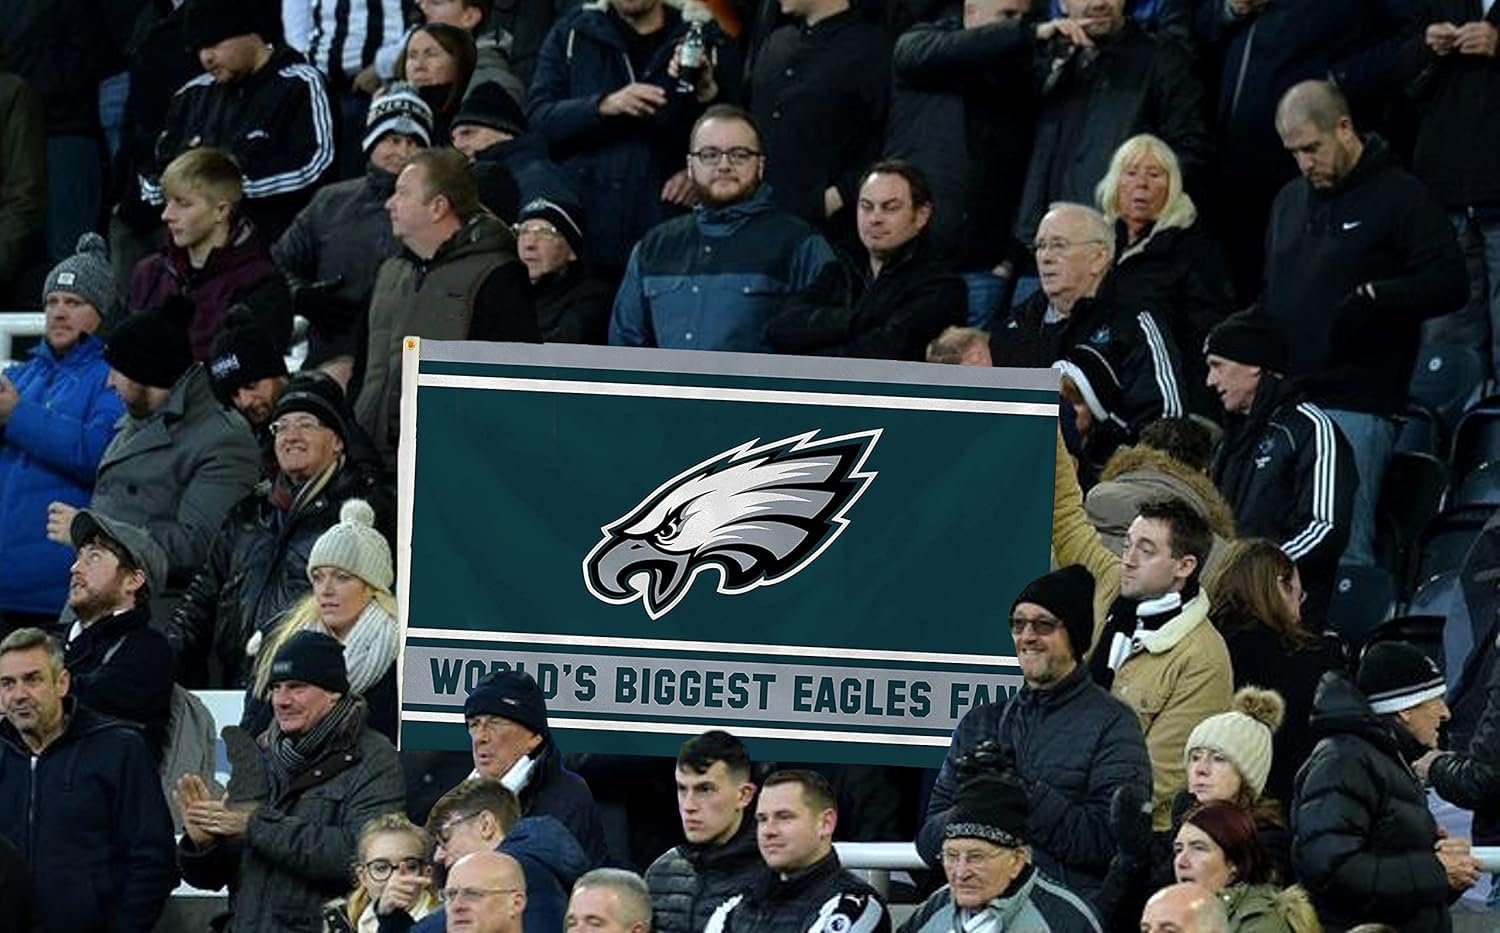 Philadelphia Eagles 3x5 Feet Flag Banner, World's Biggest Fan, Metal Grommets, Single Sided, Indoor or Outdoor Use